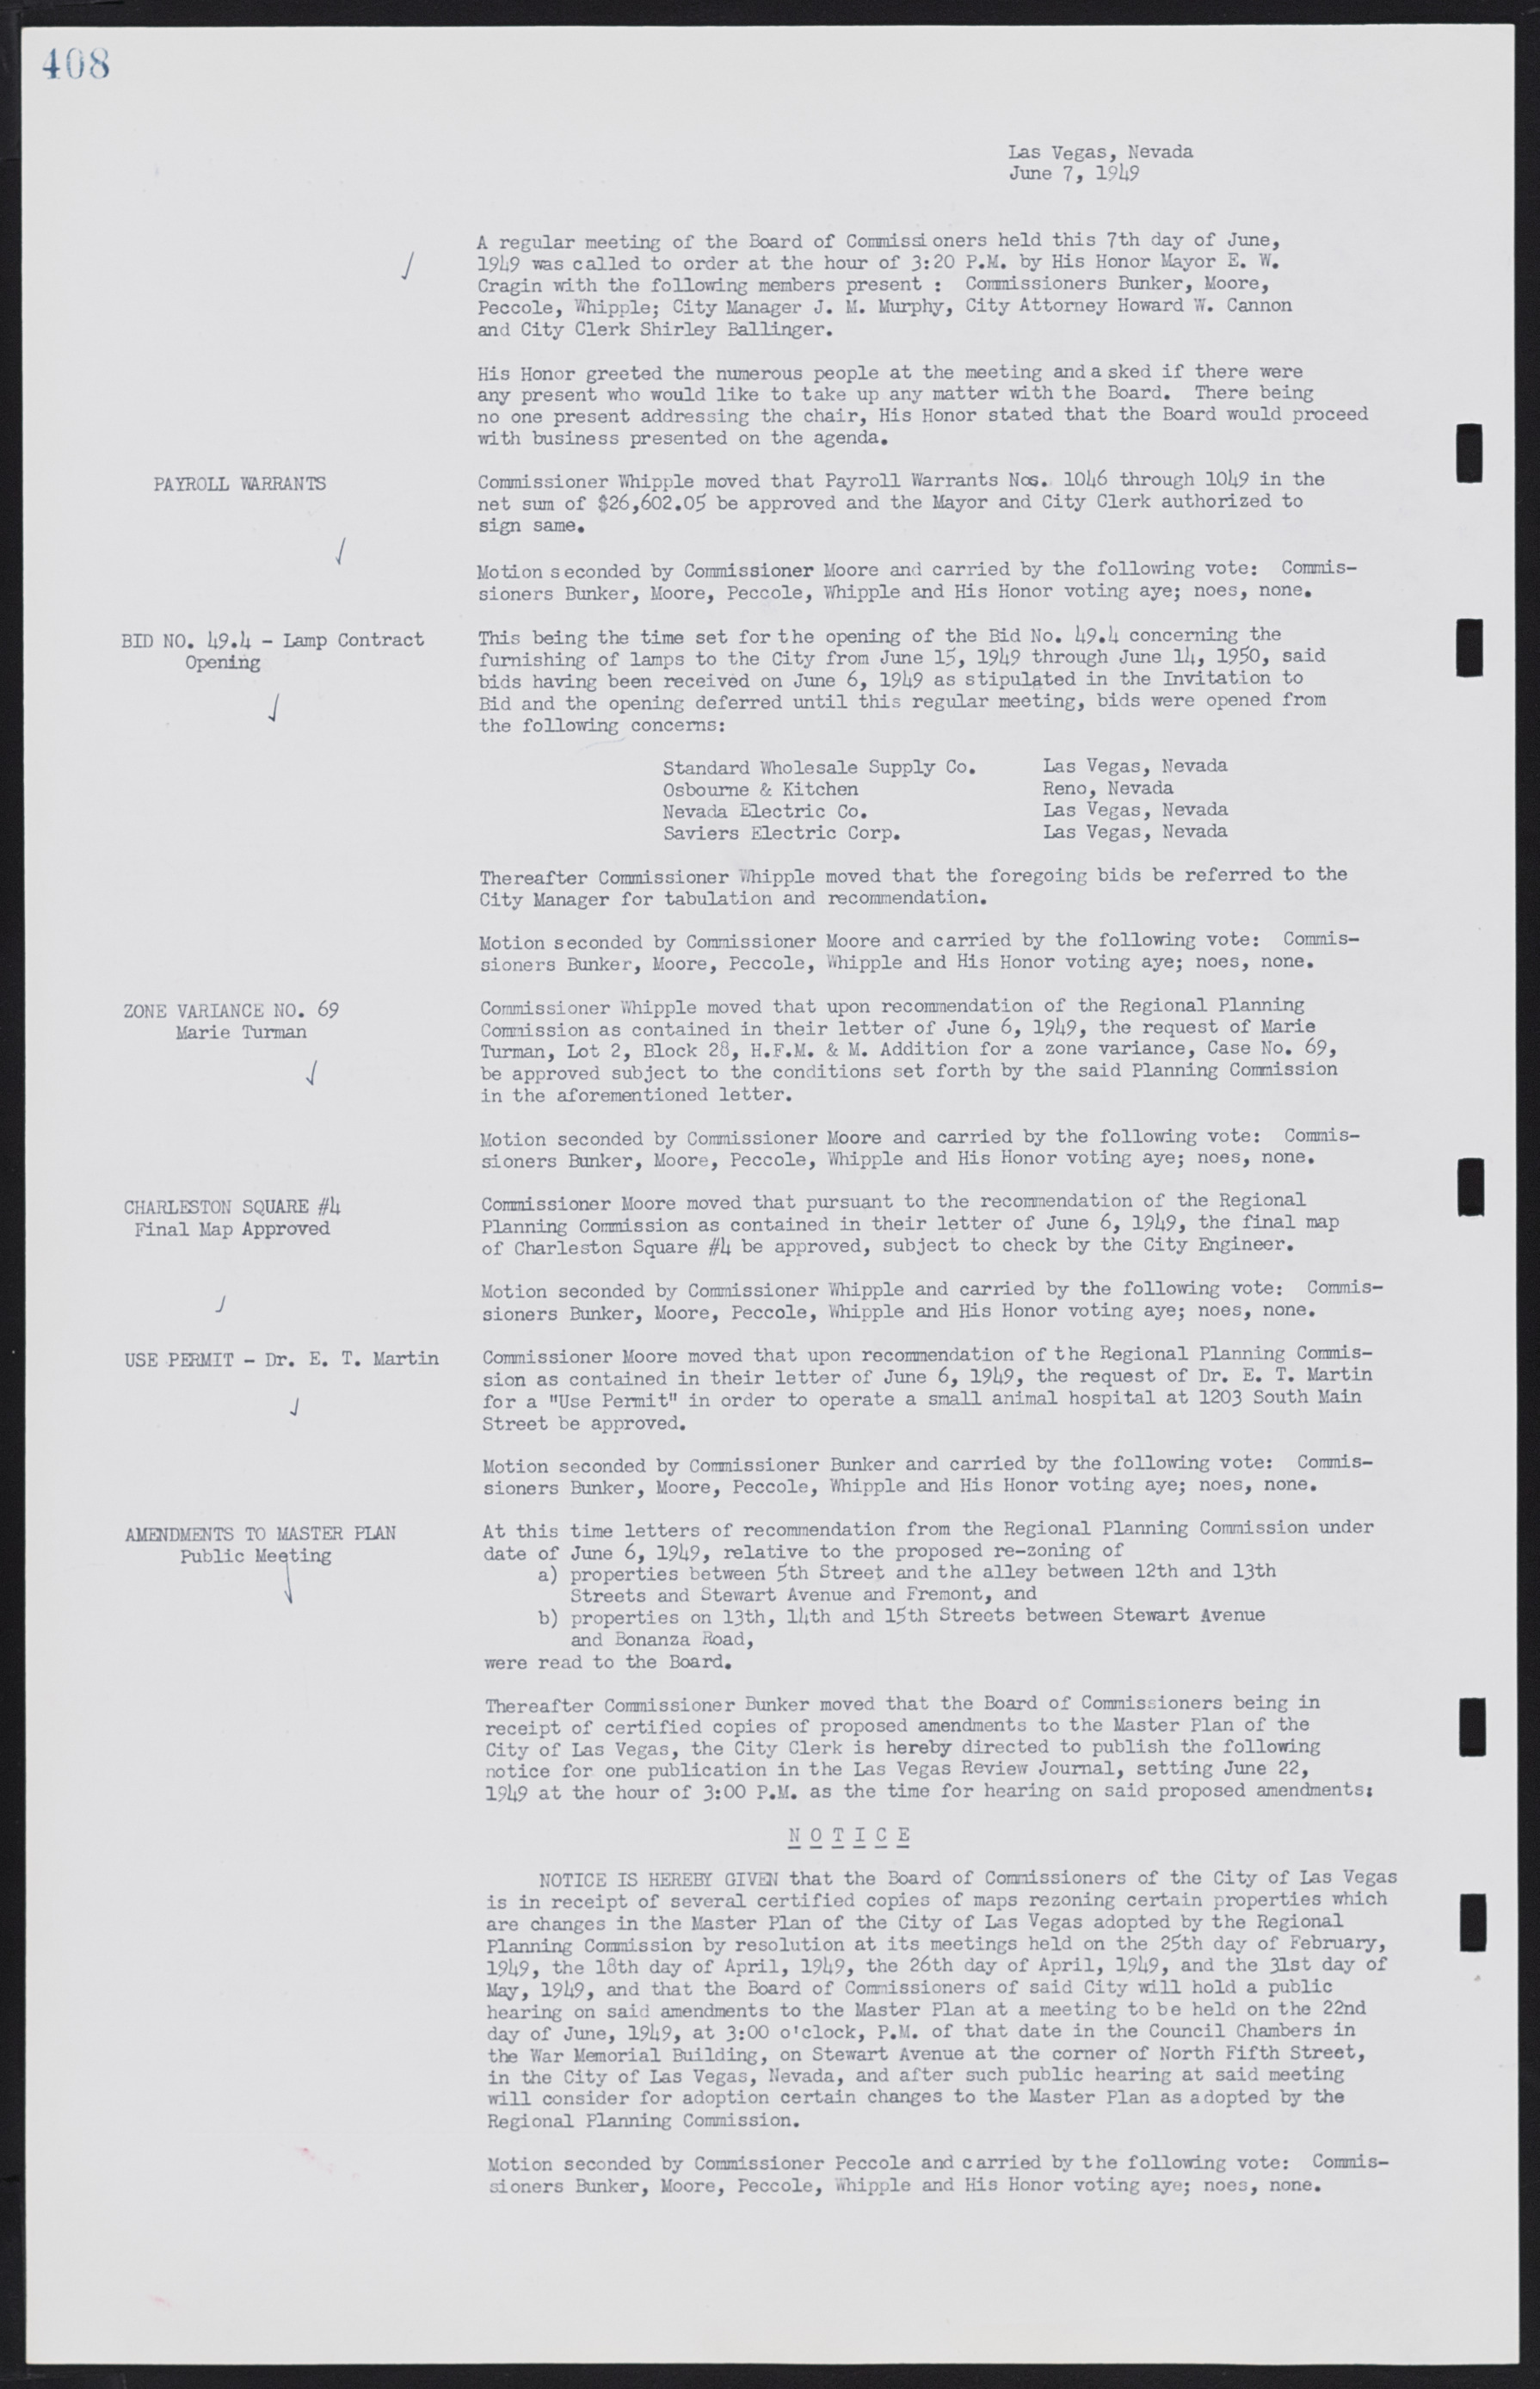 Las Vegas City Commission Minutes, January 7, 1947 to October 26, 1949, lvc000006-438